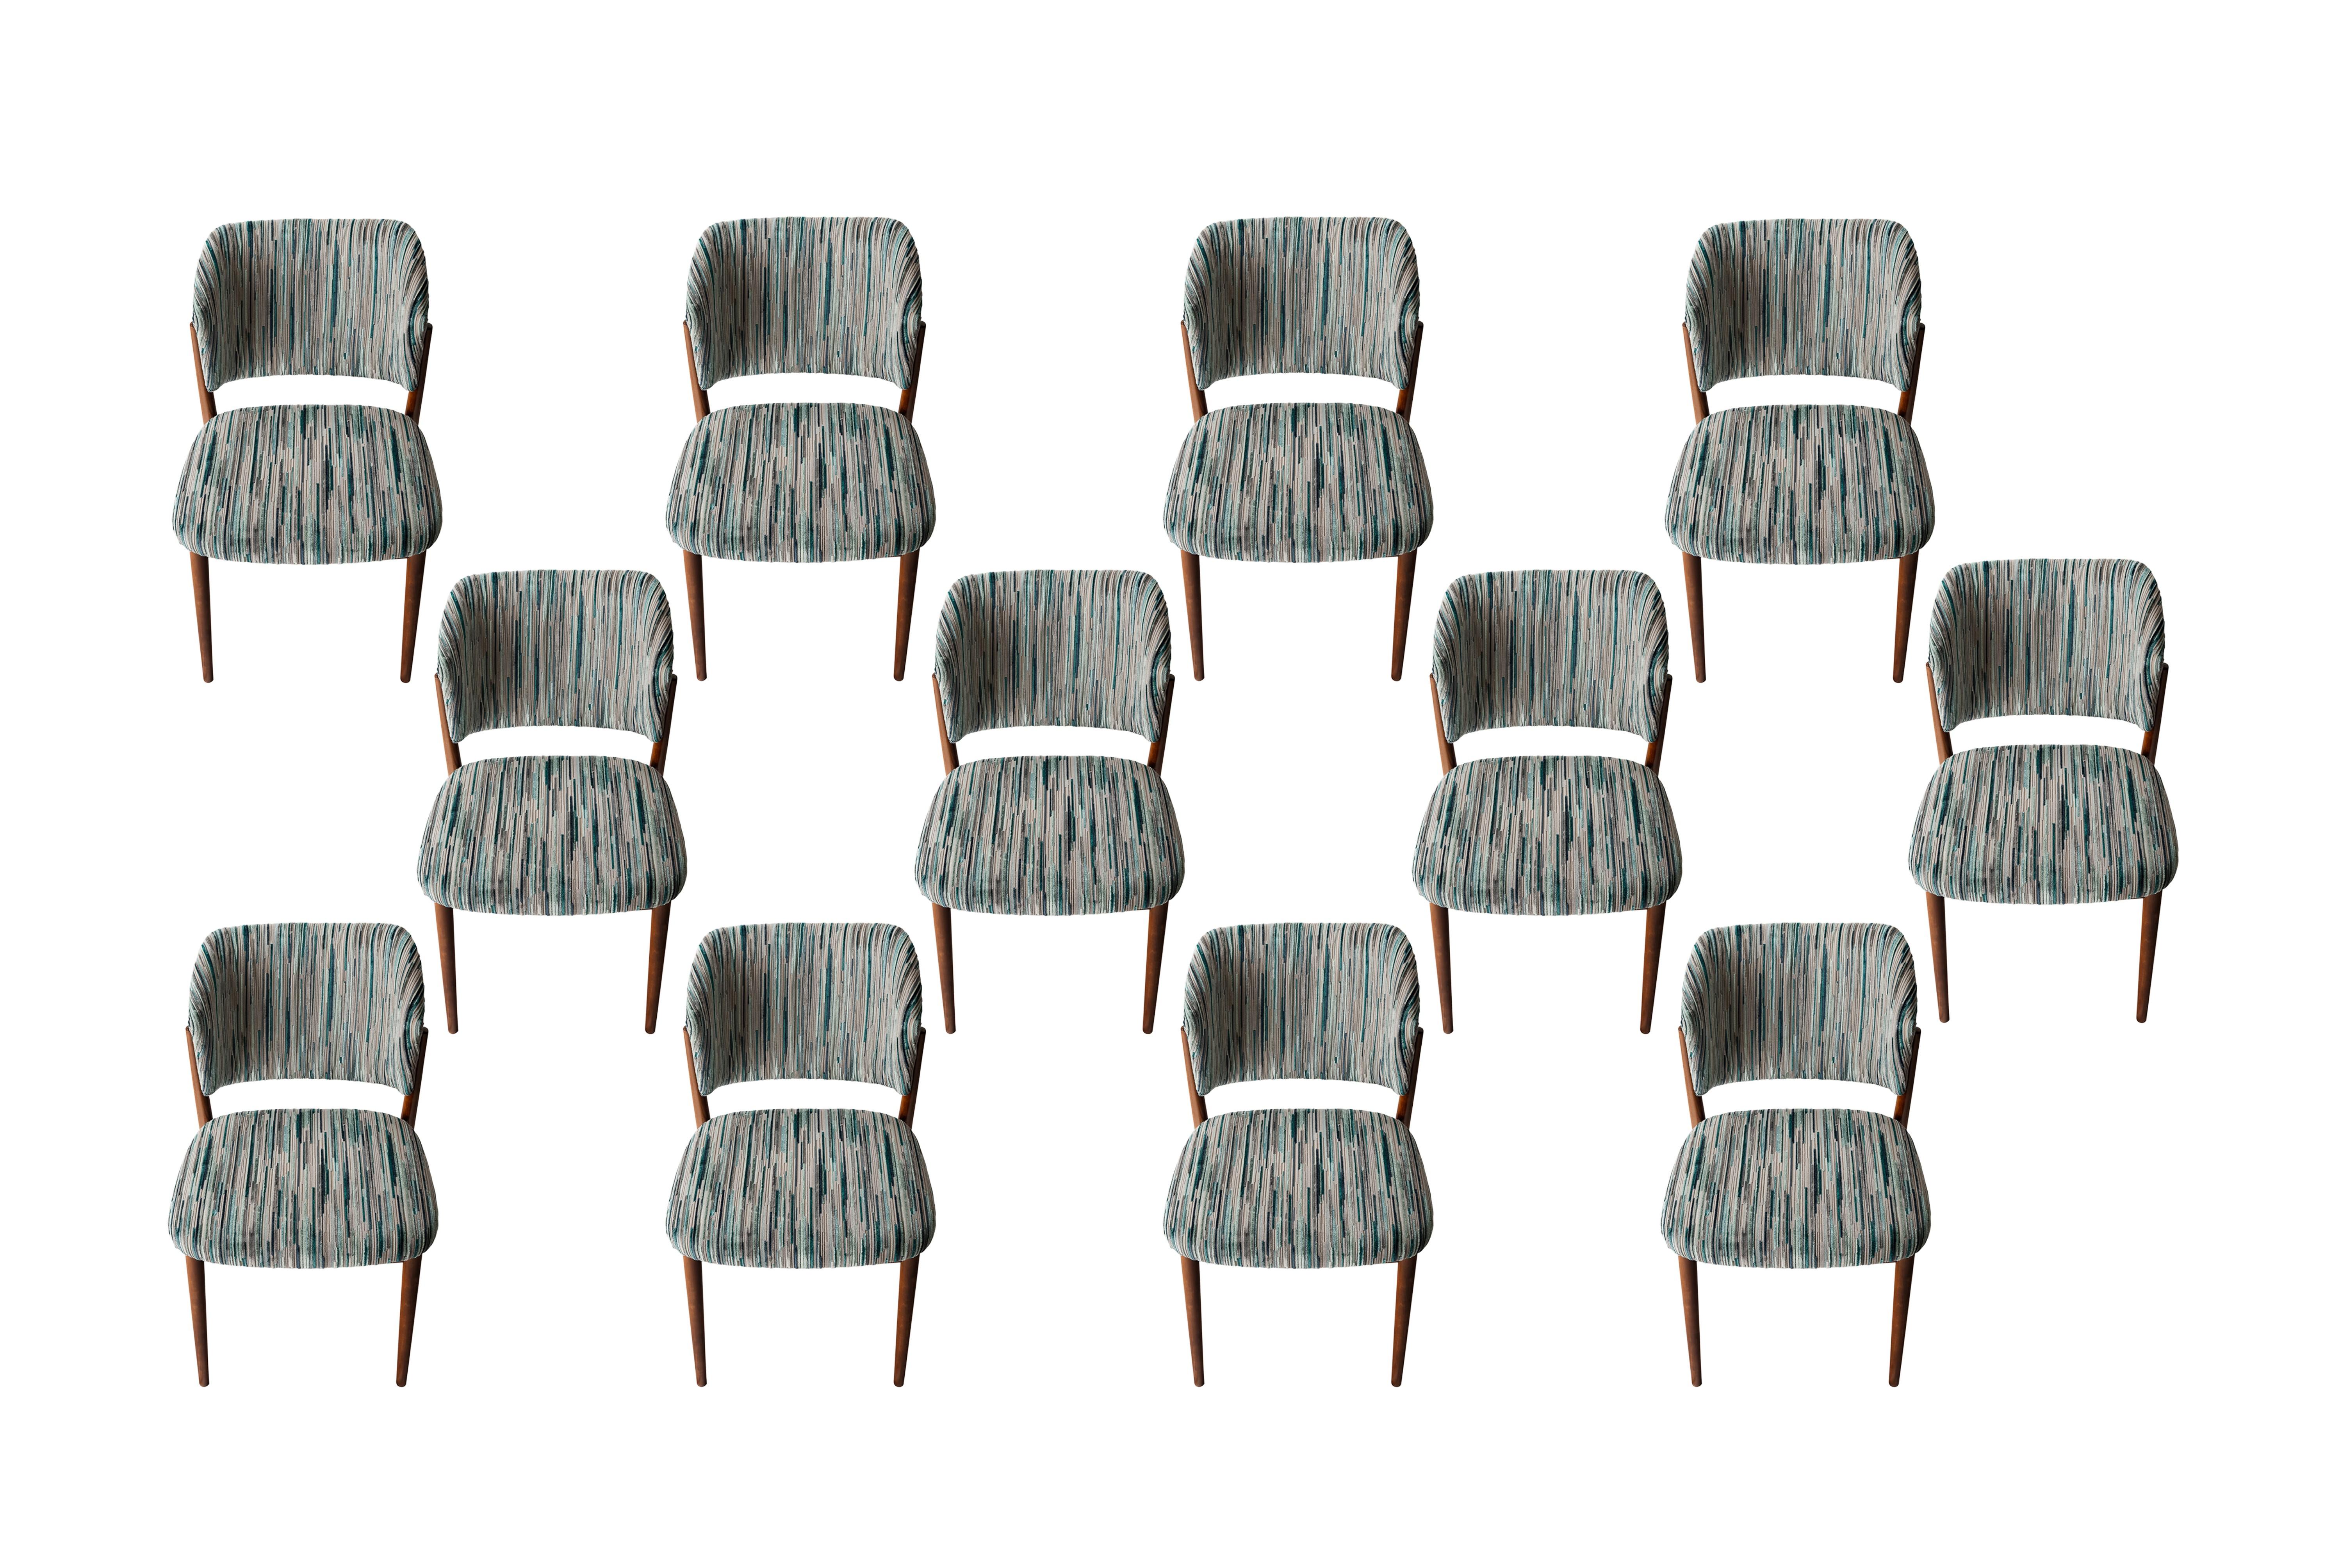 Midcentury teak Arne Vodder for France & Daverkosen Denmark dining chairs, 1060s.

1 set of 8 dining chairs teak with new upholstery (Filament Velvet 3 - Blue mood by Aldeco). Design by Arne Vodder in the 1960s. Gorgeous organic design with deep